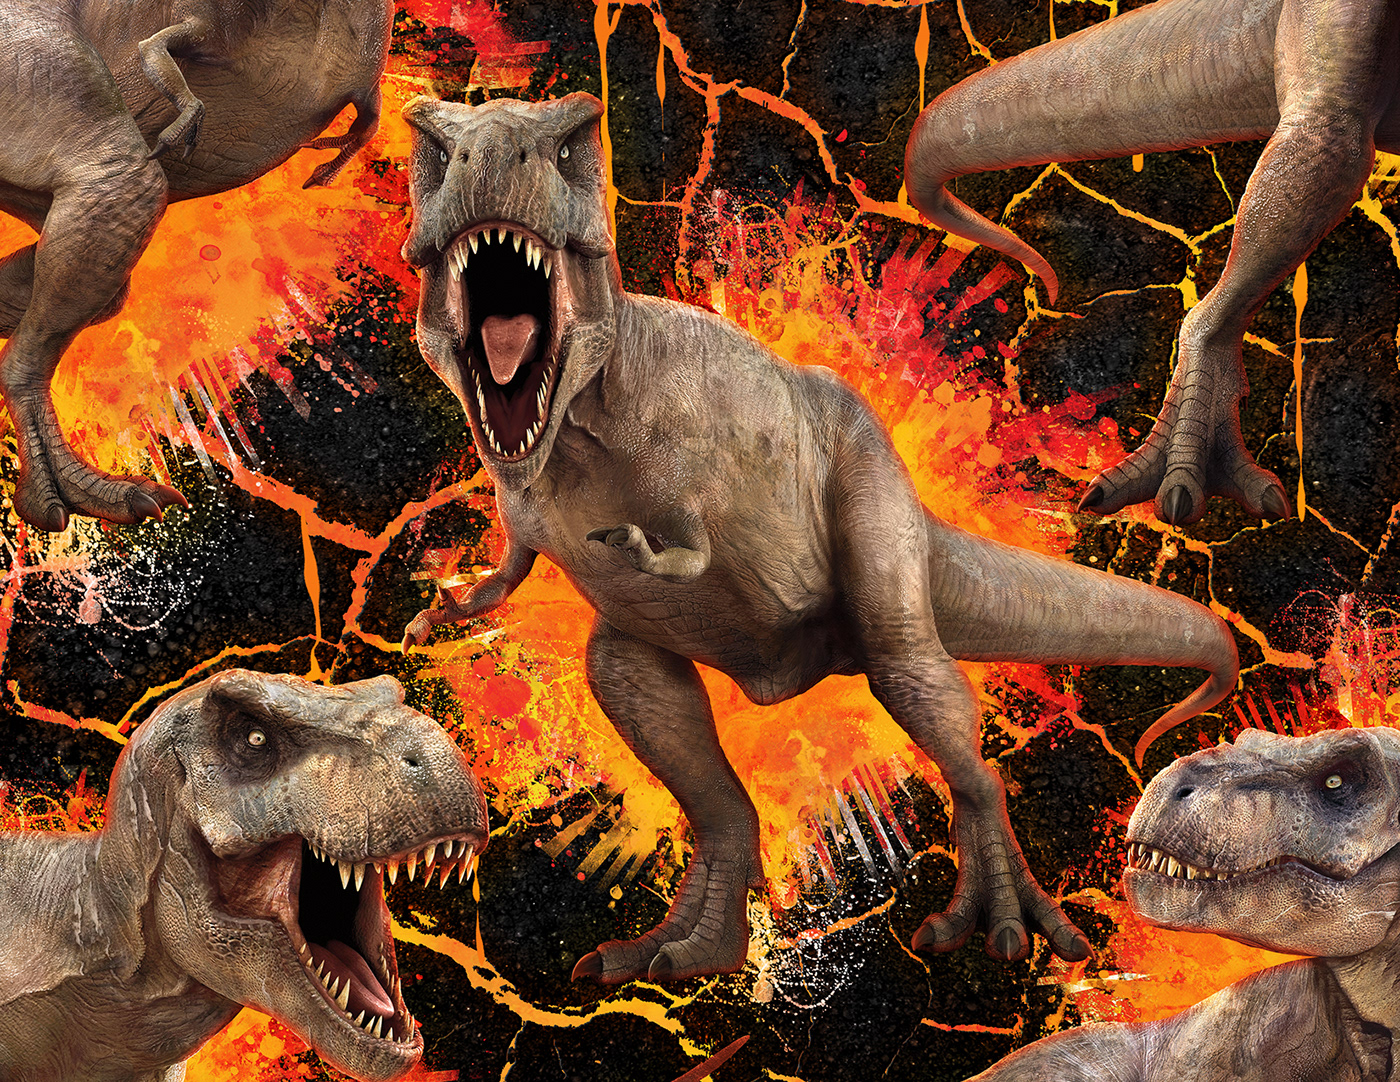 Jurassic World jurassic park dinosaurs Style Guide character art t-rex rapt...